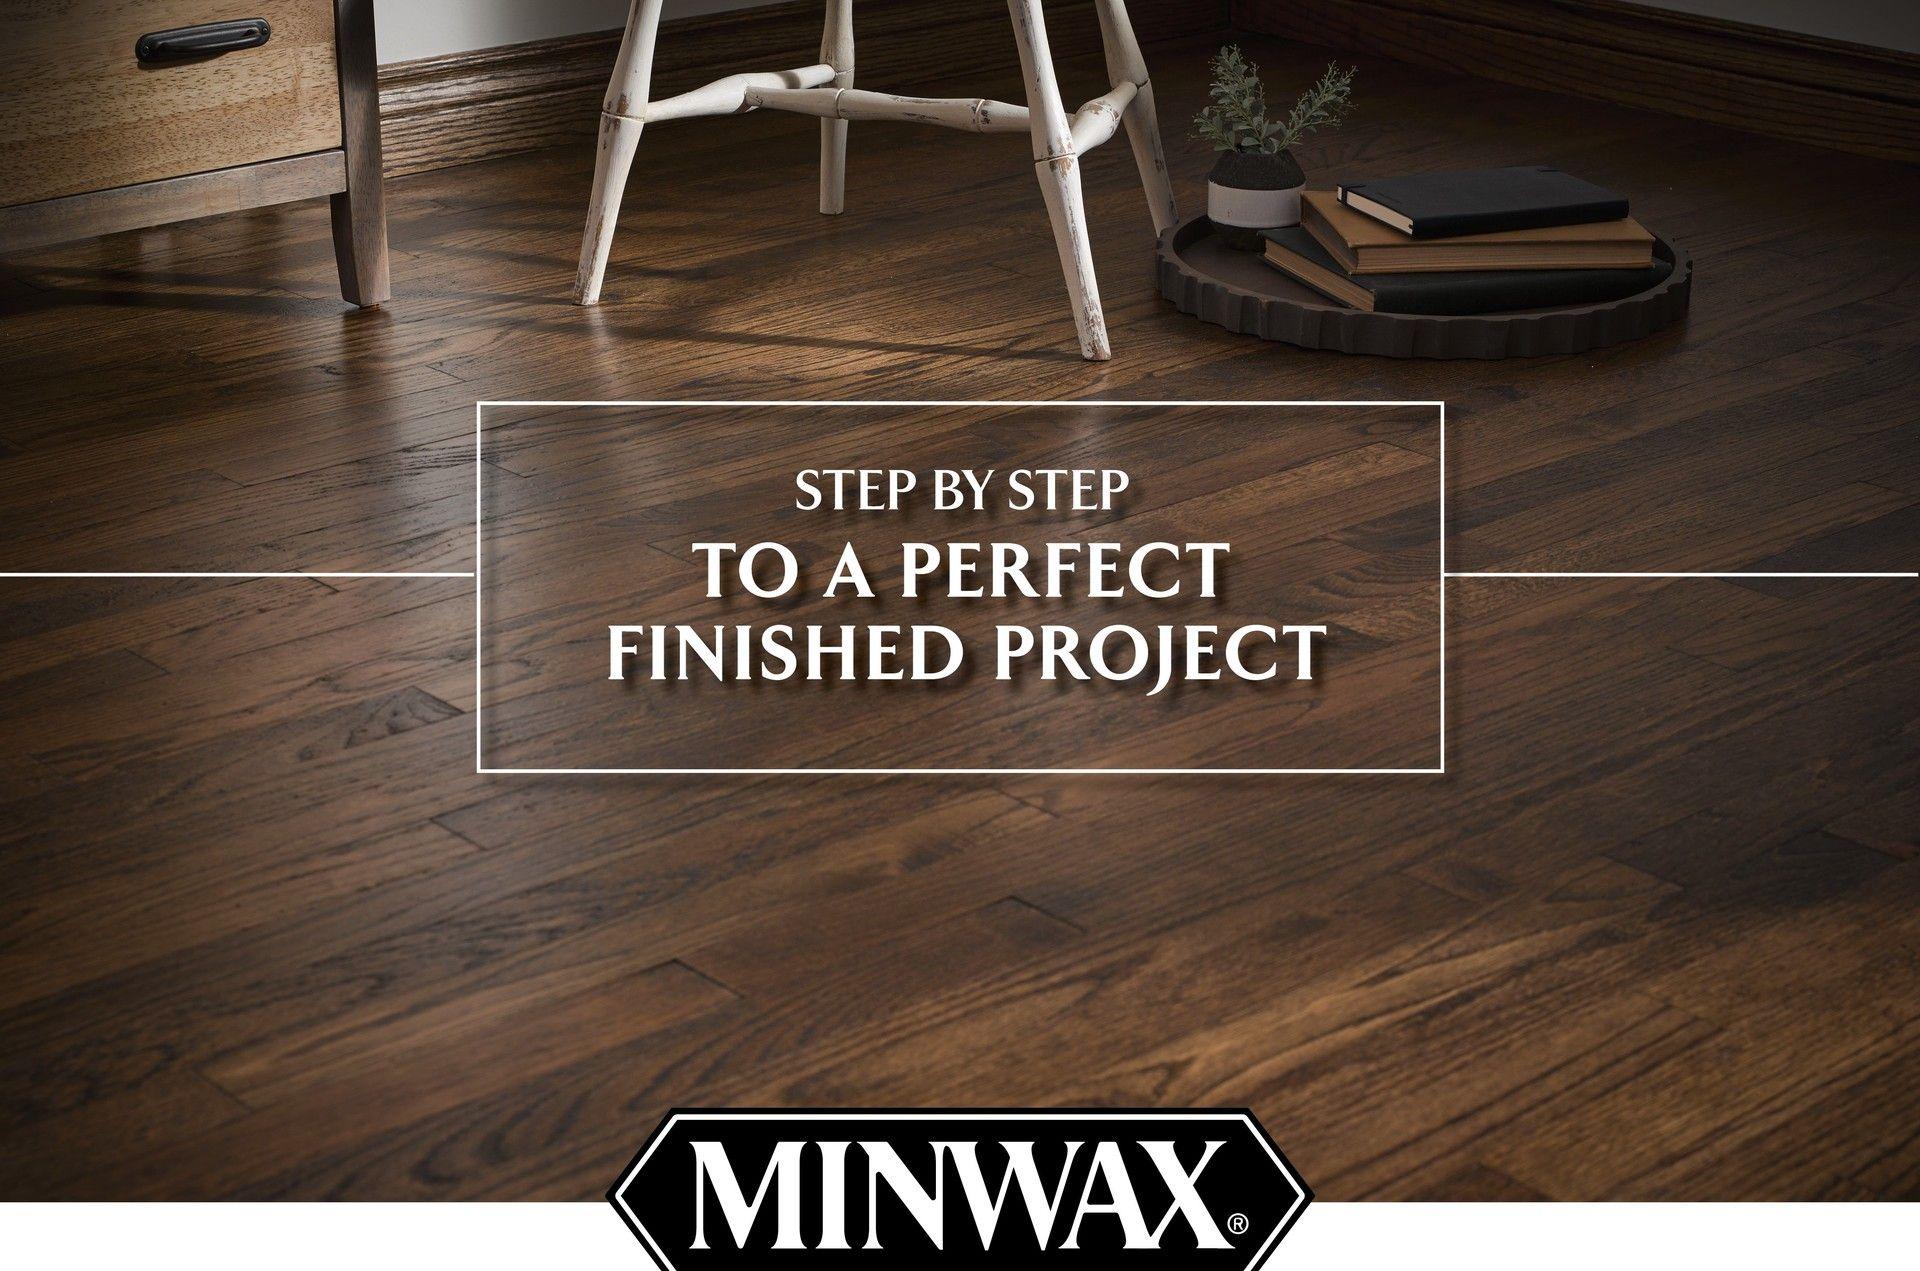 Minwax Logo - Minwax Wood Finish Special Walnut Oil Based Interior Stain Actual